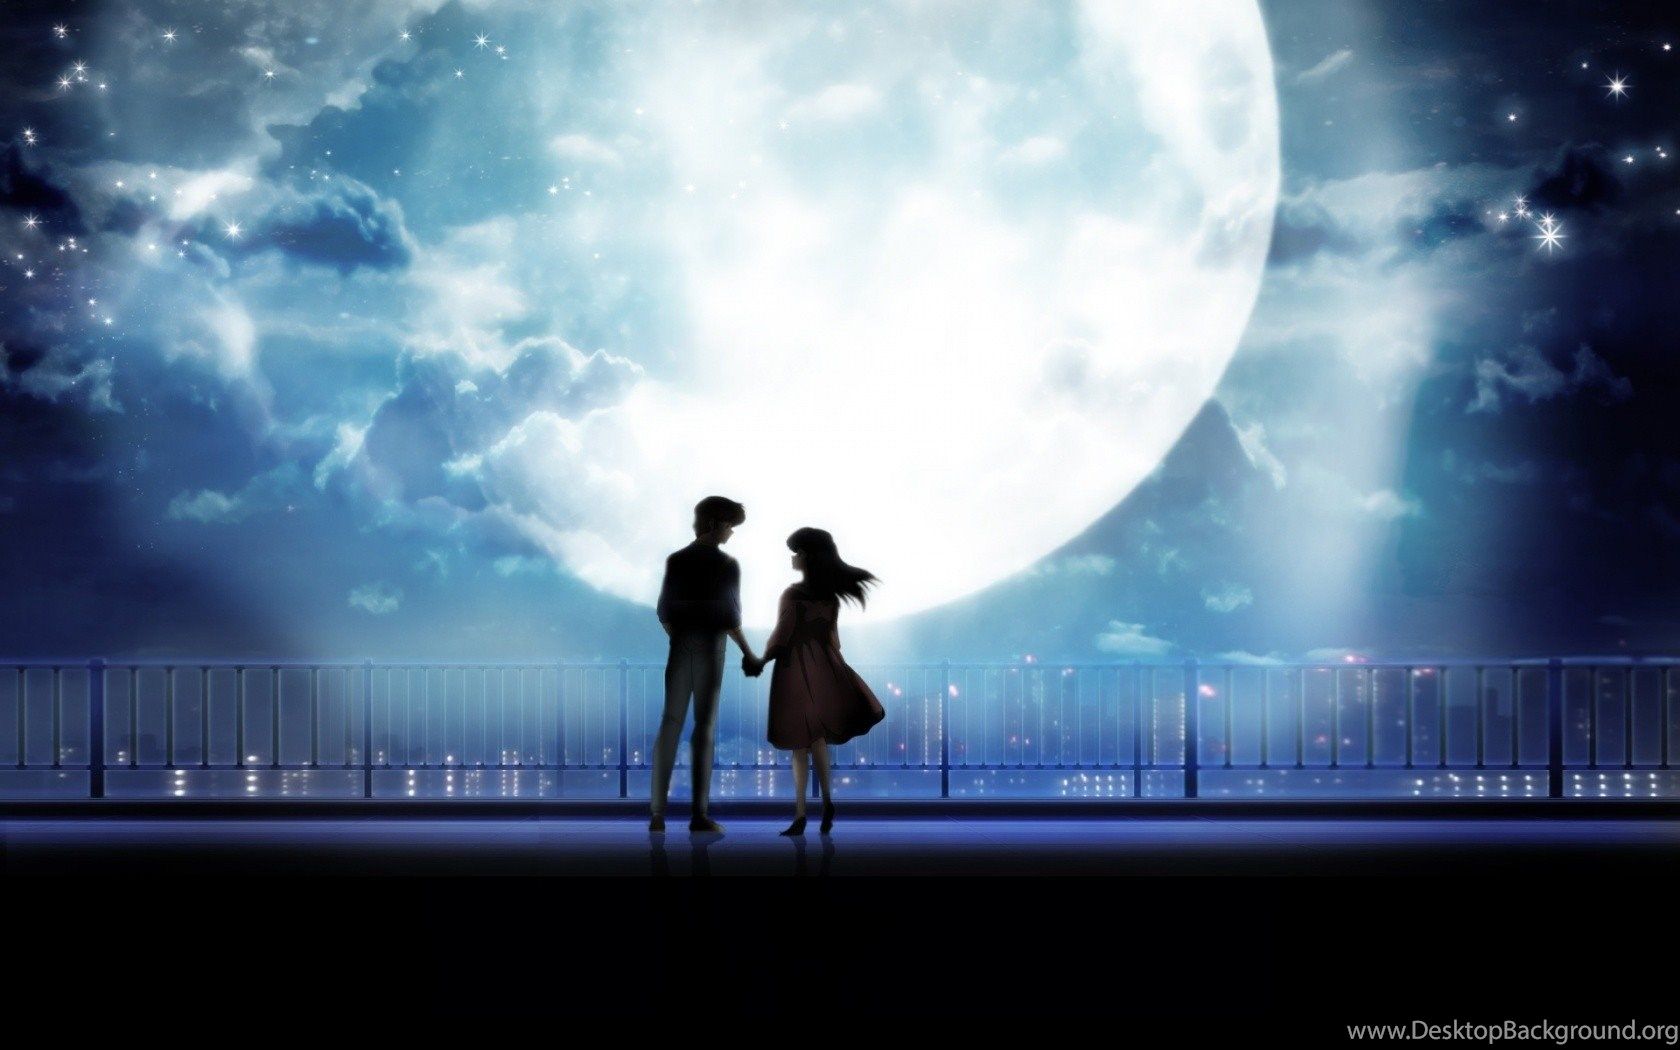 Anime Love Couple In Dark Night Image Desktop Background